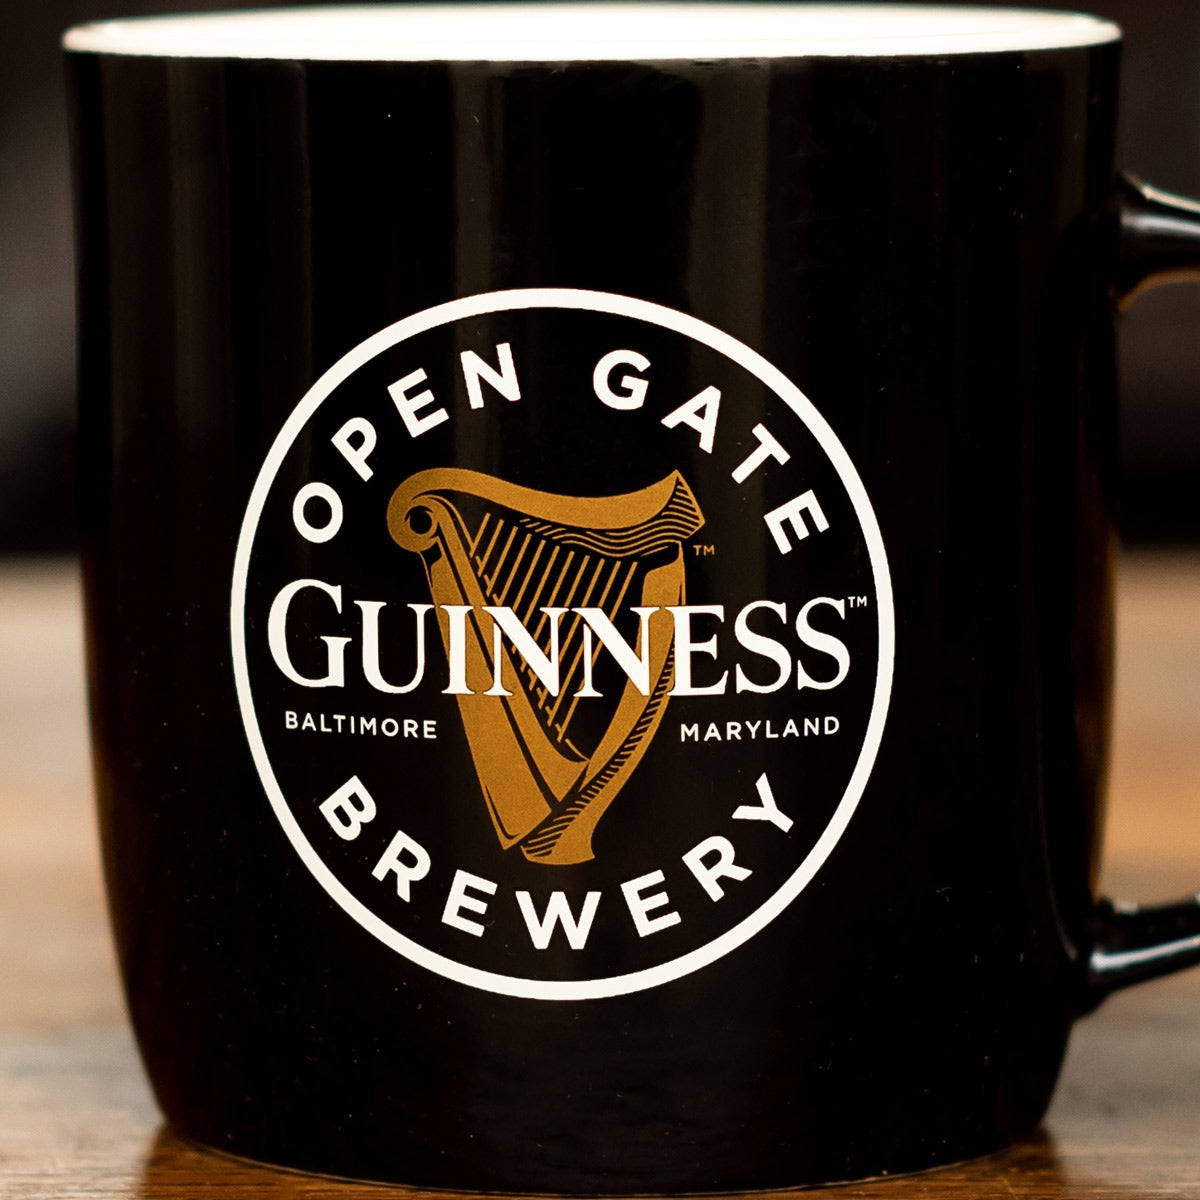 Open Guinness Open Gate Brewery Black Ceramic Mug with logo.